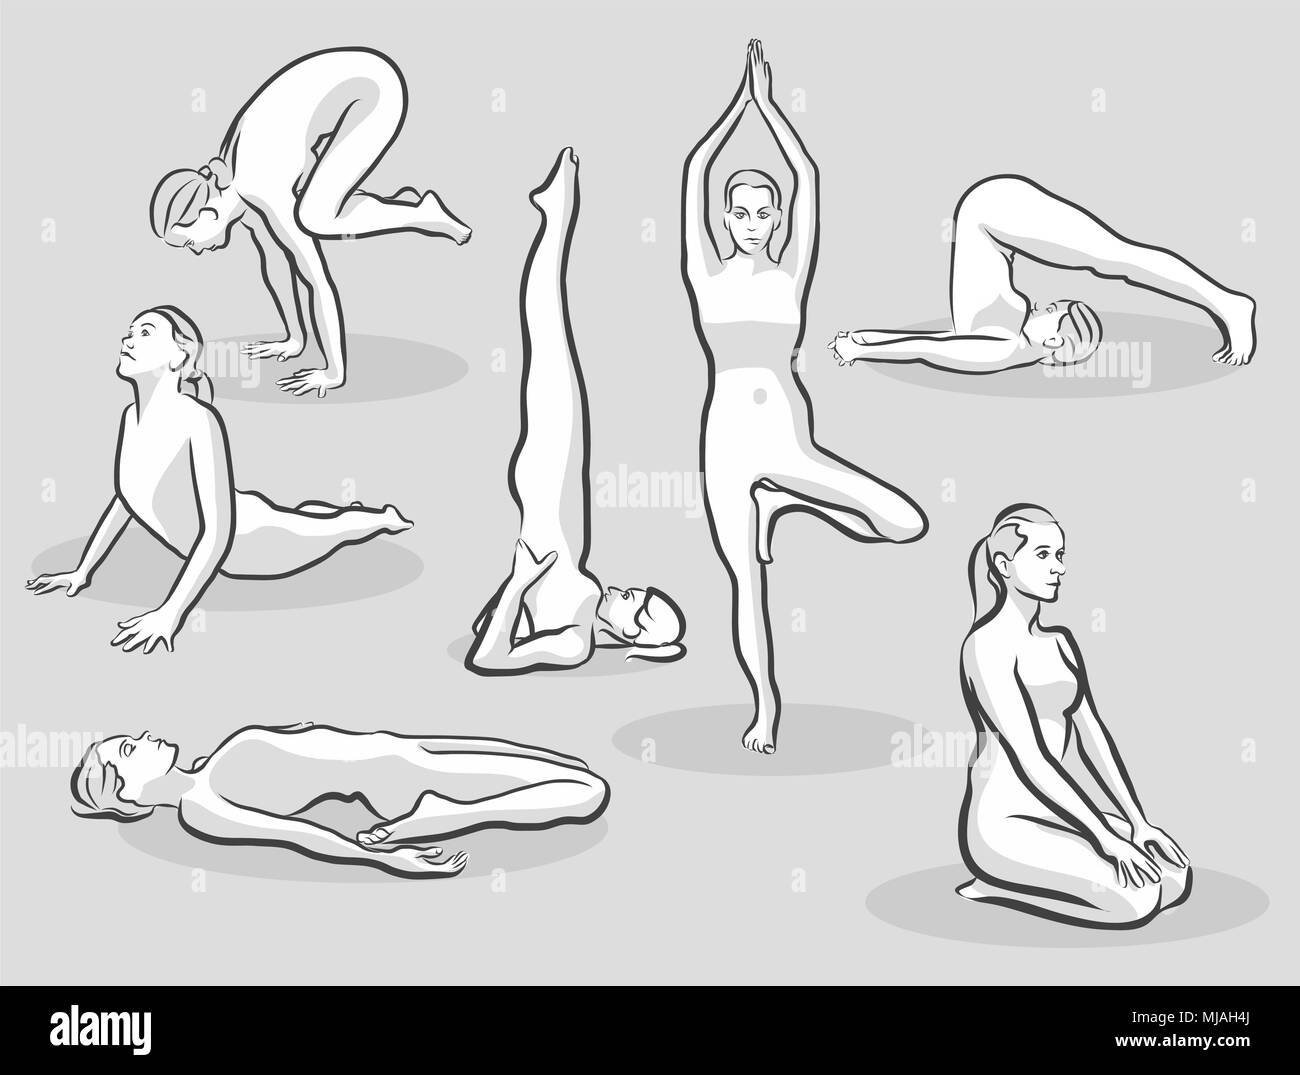 Seven Various Halftone Yoga Poses, Free Hand drawn vector halftone Sketch Stock Vector